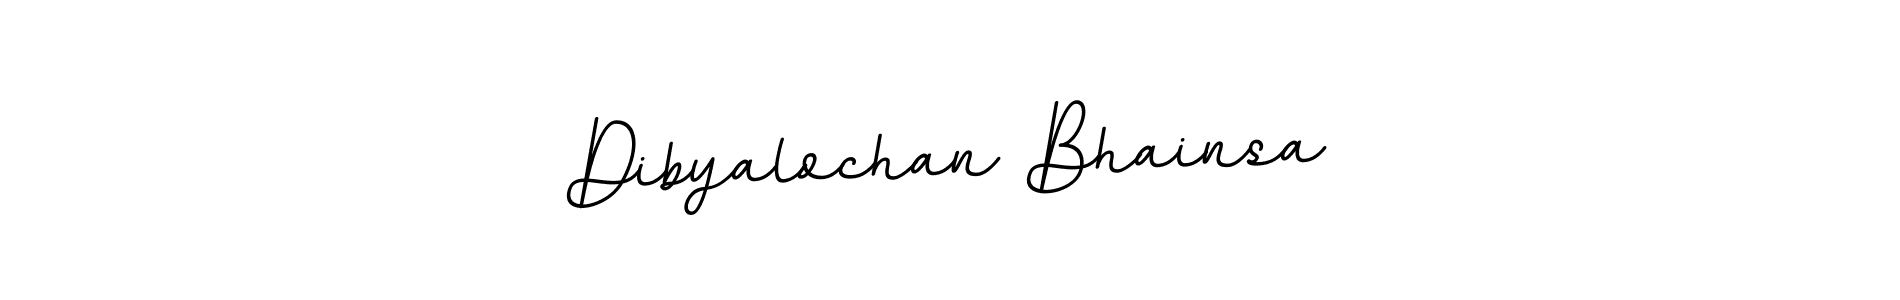 How to Draw Dibyalochan Bhainsa signature style? BallpointsItalic-DORy9 is a latest design signature styles for name Dibyalochan Bhainsa. Dibyalochan Bhainsa signature style 11 images and pictures png